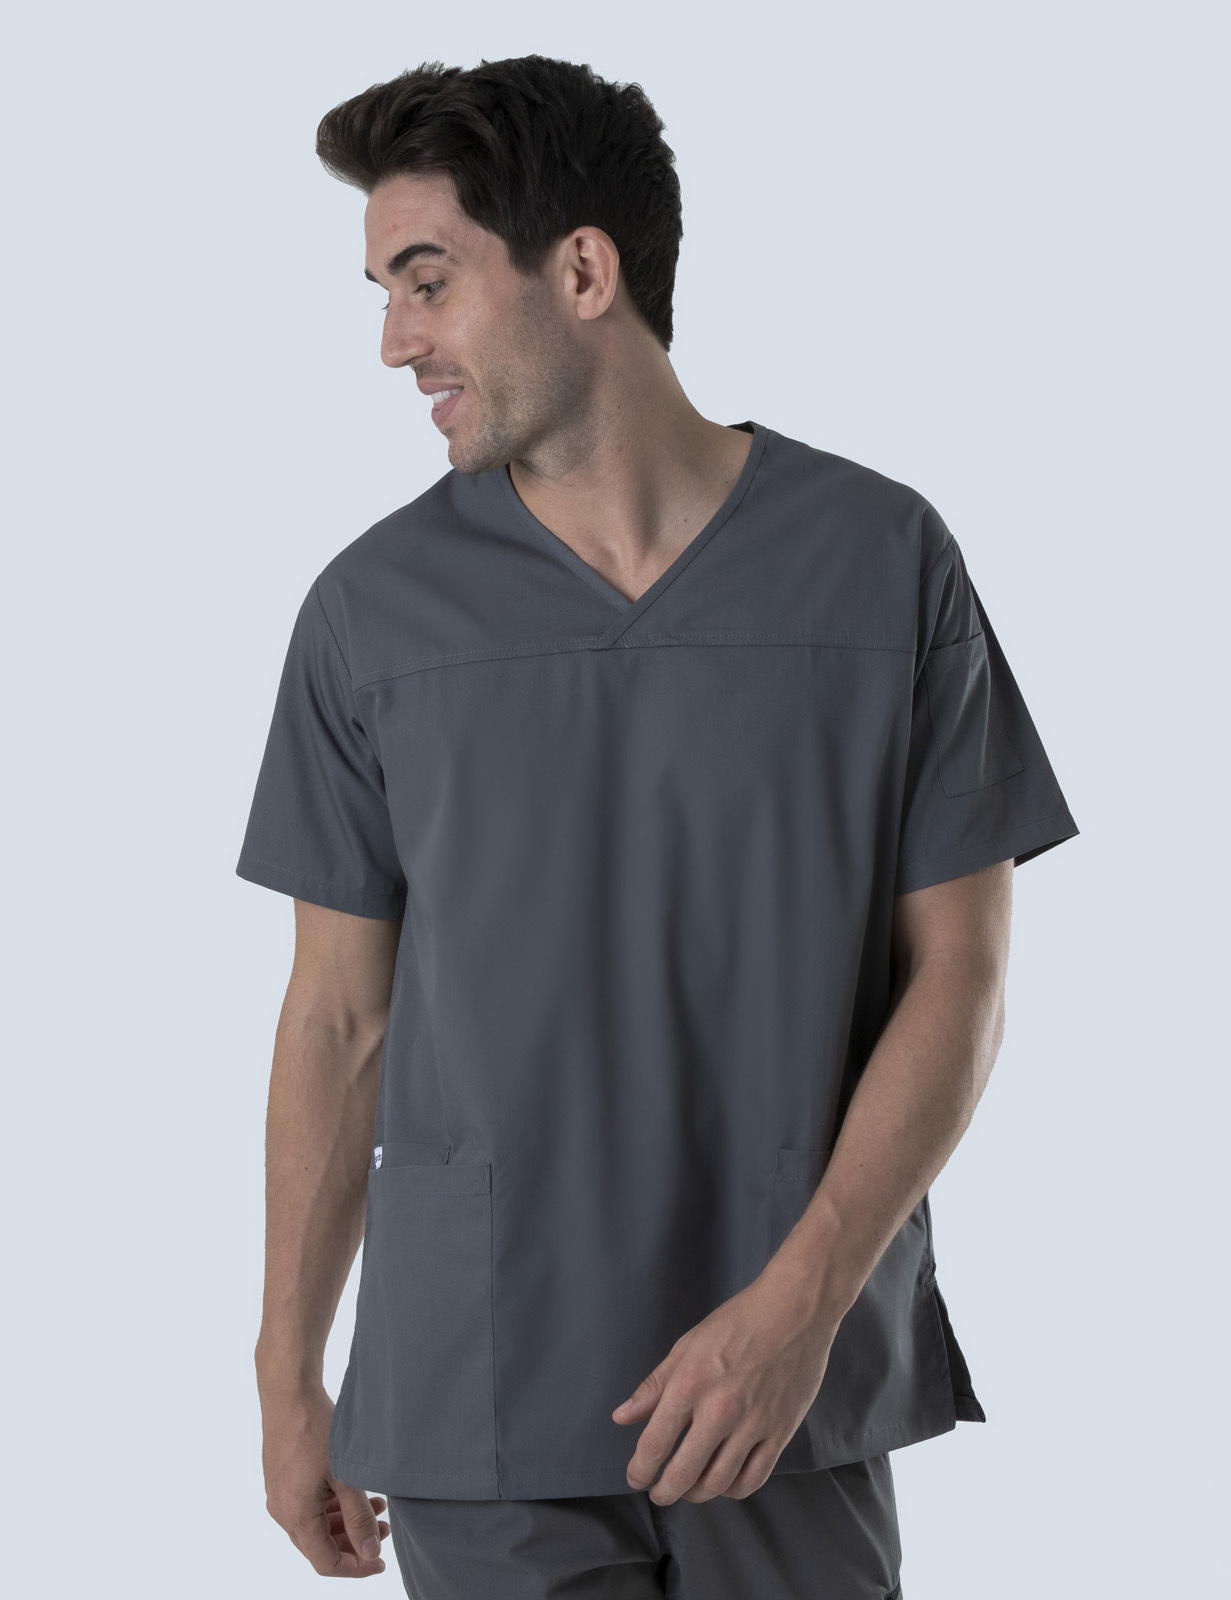 North Shore Private Hospital Assistant in Nursing Uniform Top Only Bundle (Men's Fit Solid  Top in Steel Grey + Logo)